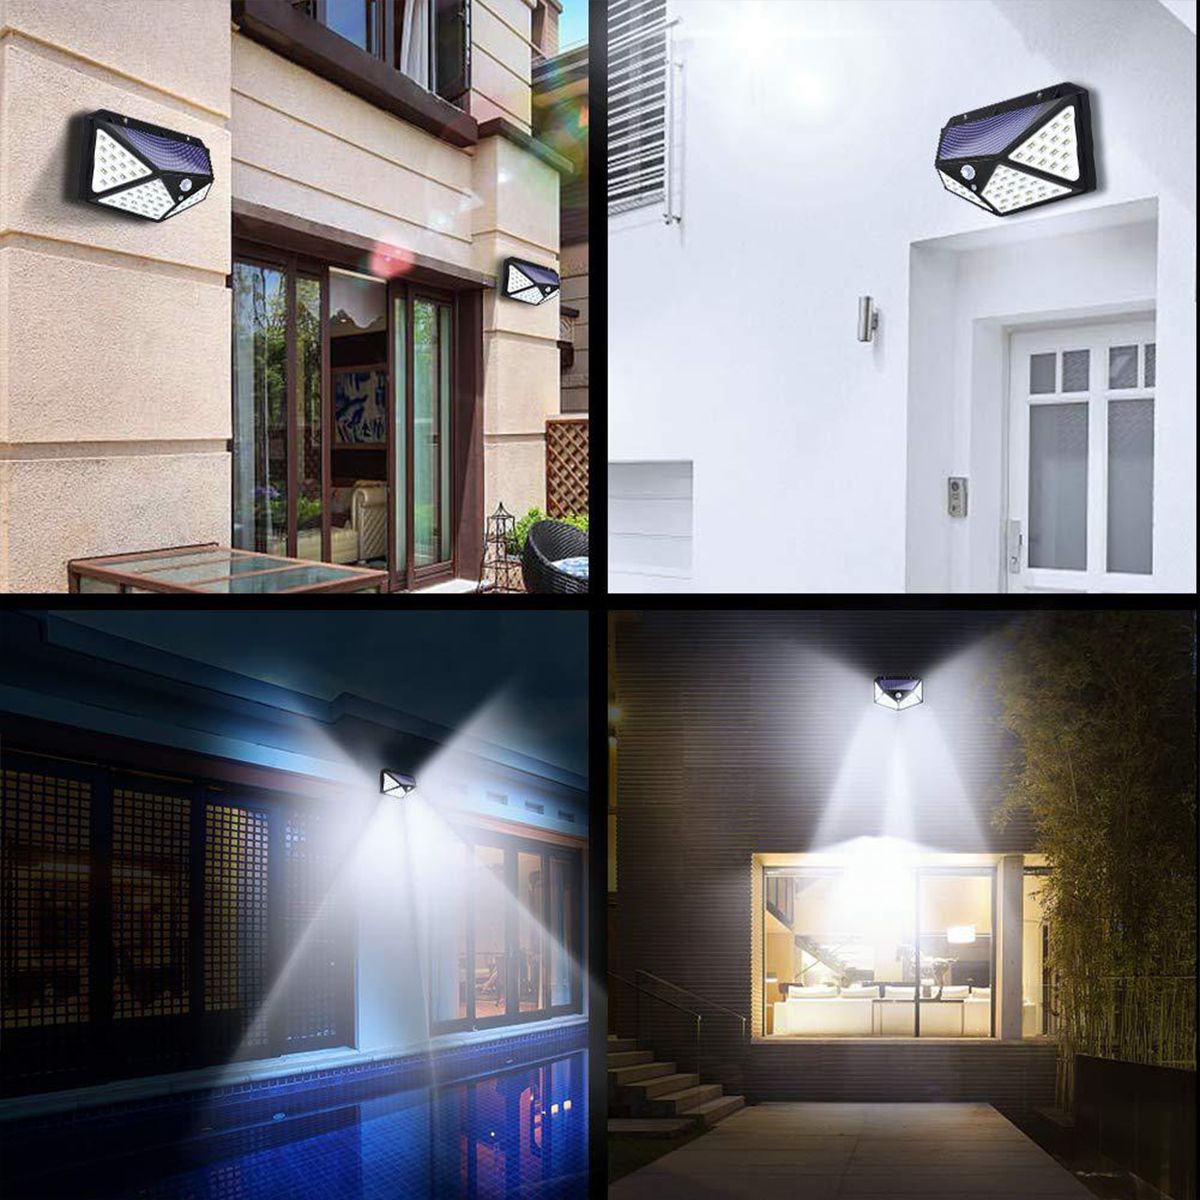 100-LED-Solar-Powered-PIR-Motion-Sensor-Street-Wall-Light-Outdoor-Security-Lamp-1594994